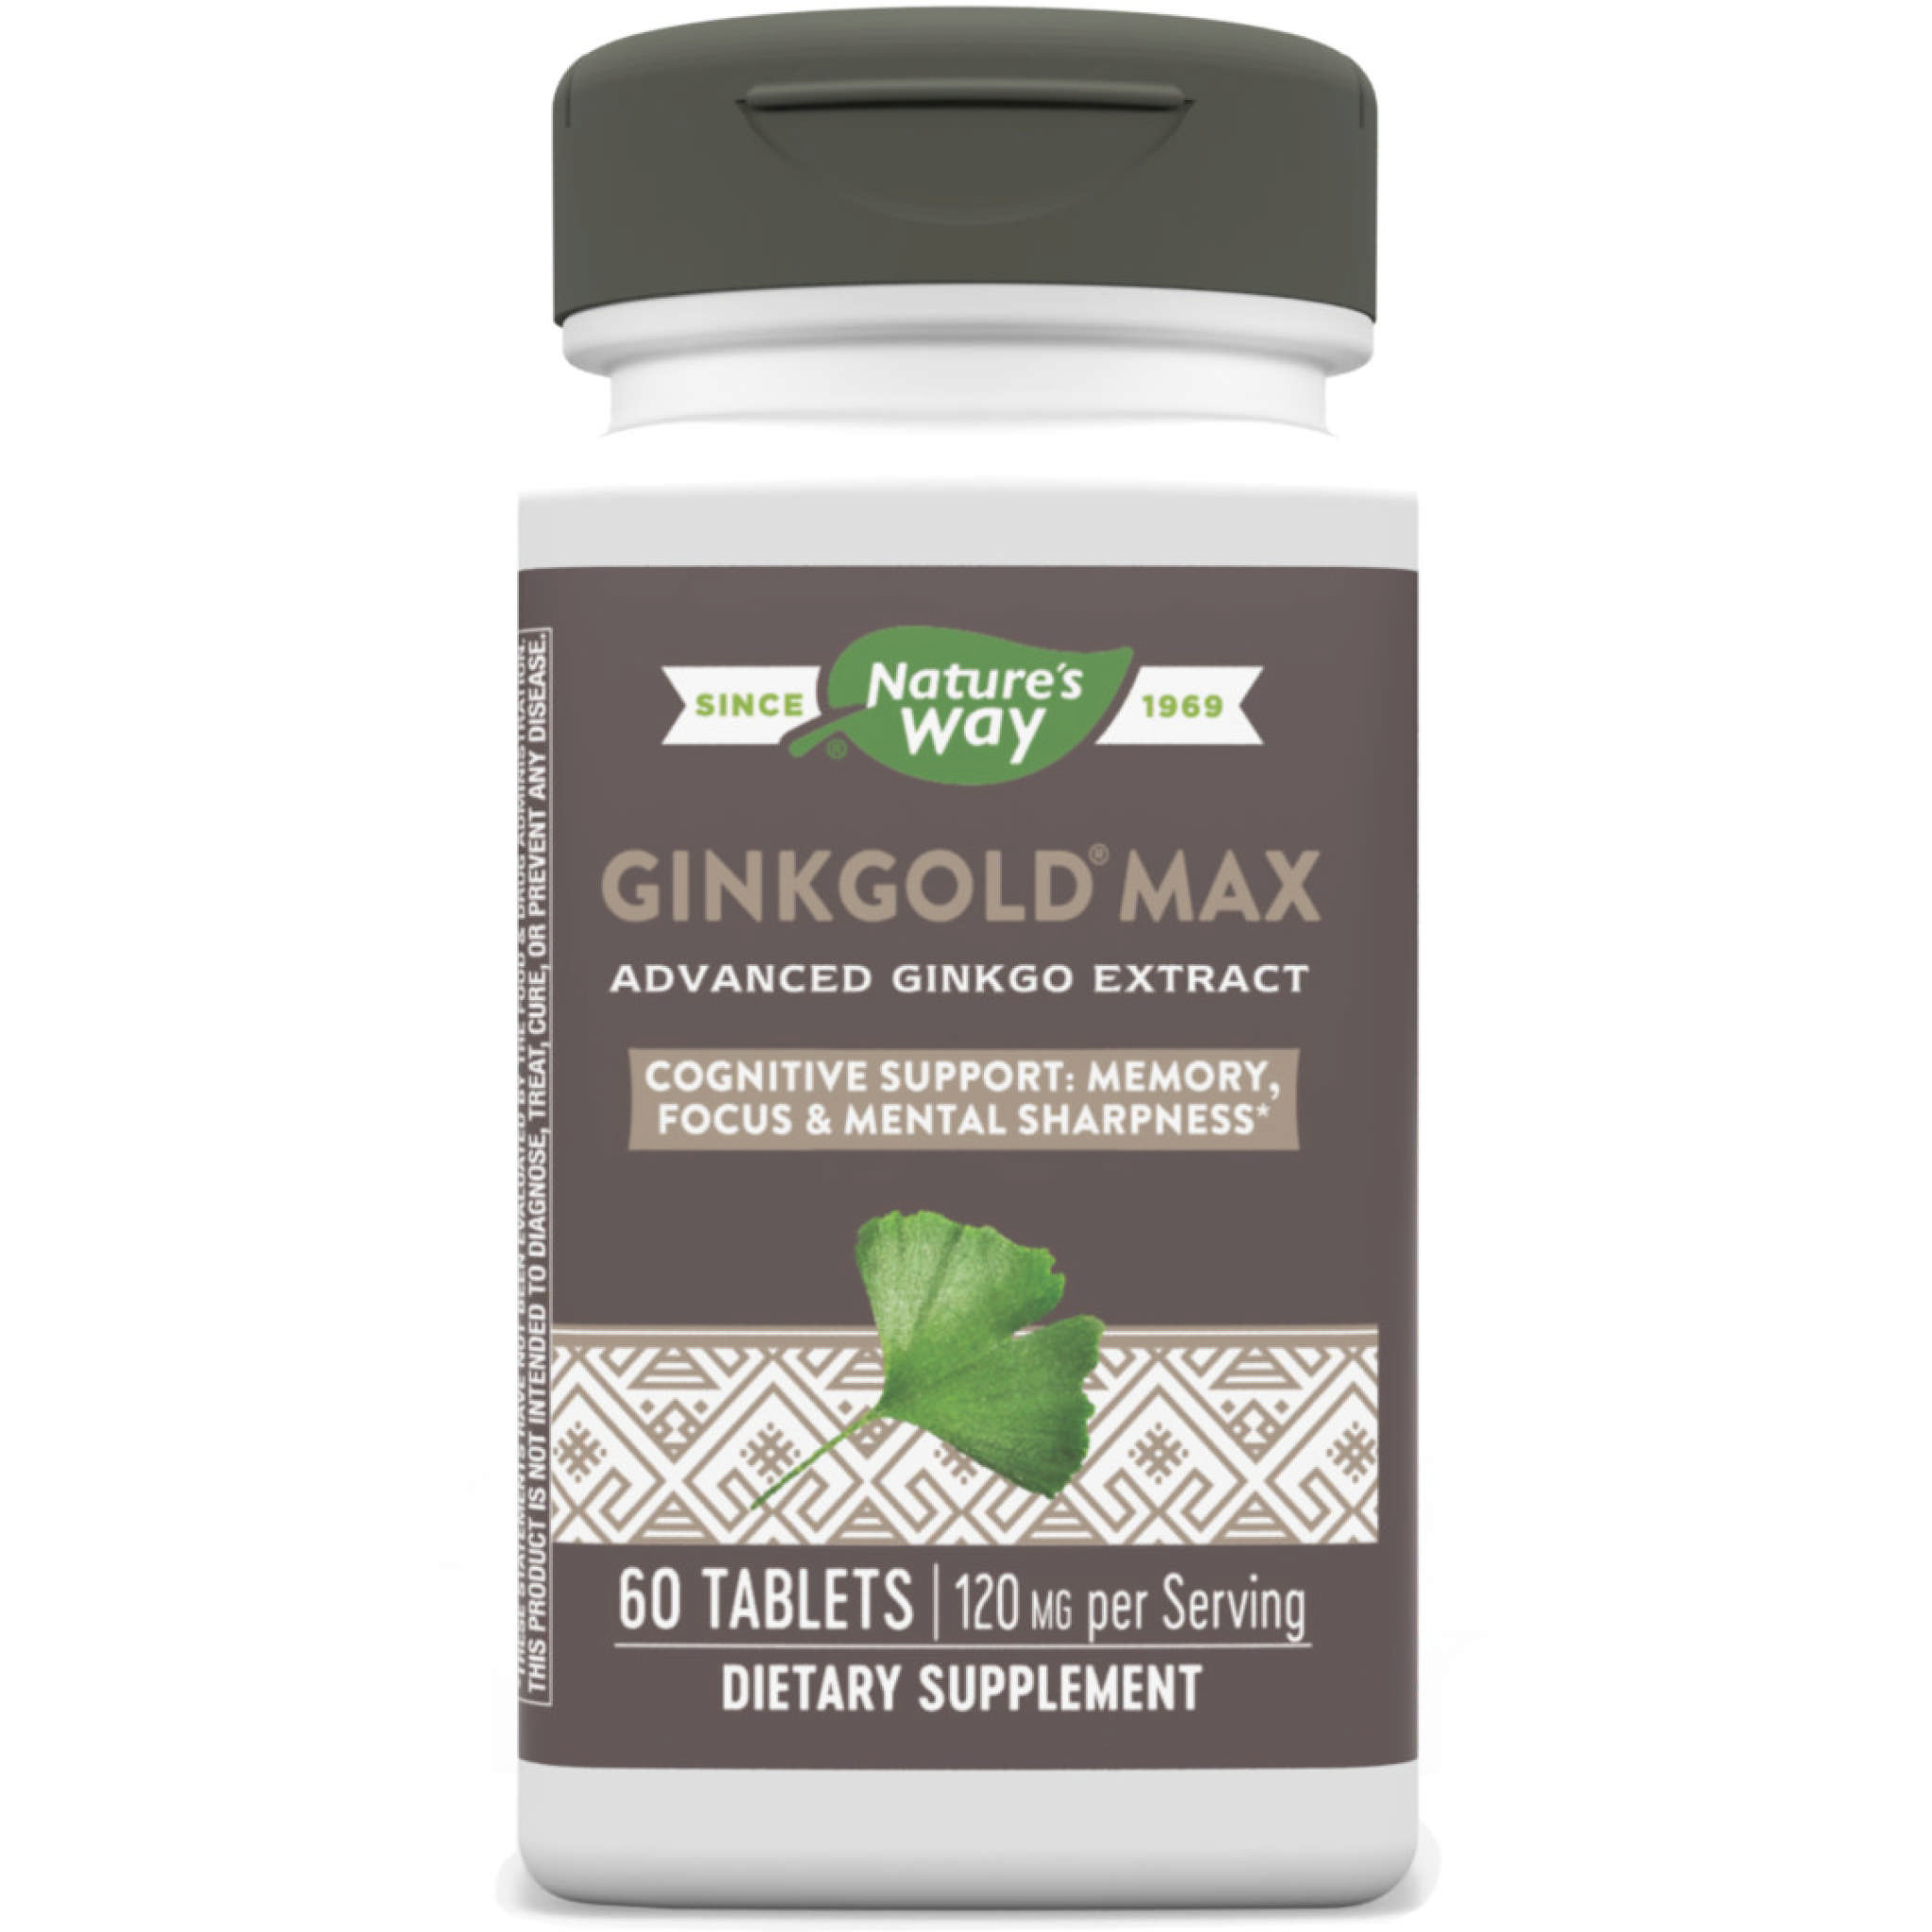 Natures Way - Ginkgold Max 120 mg Once Daily